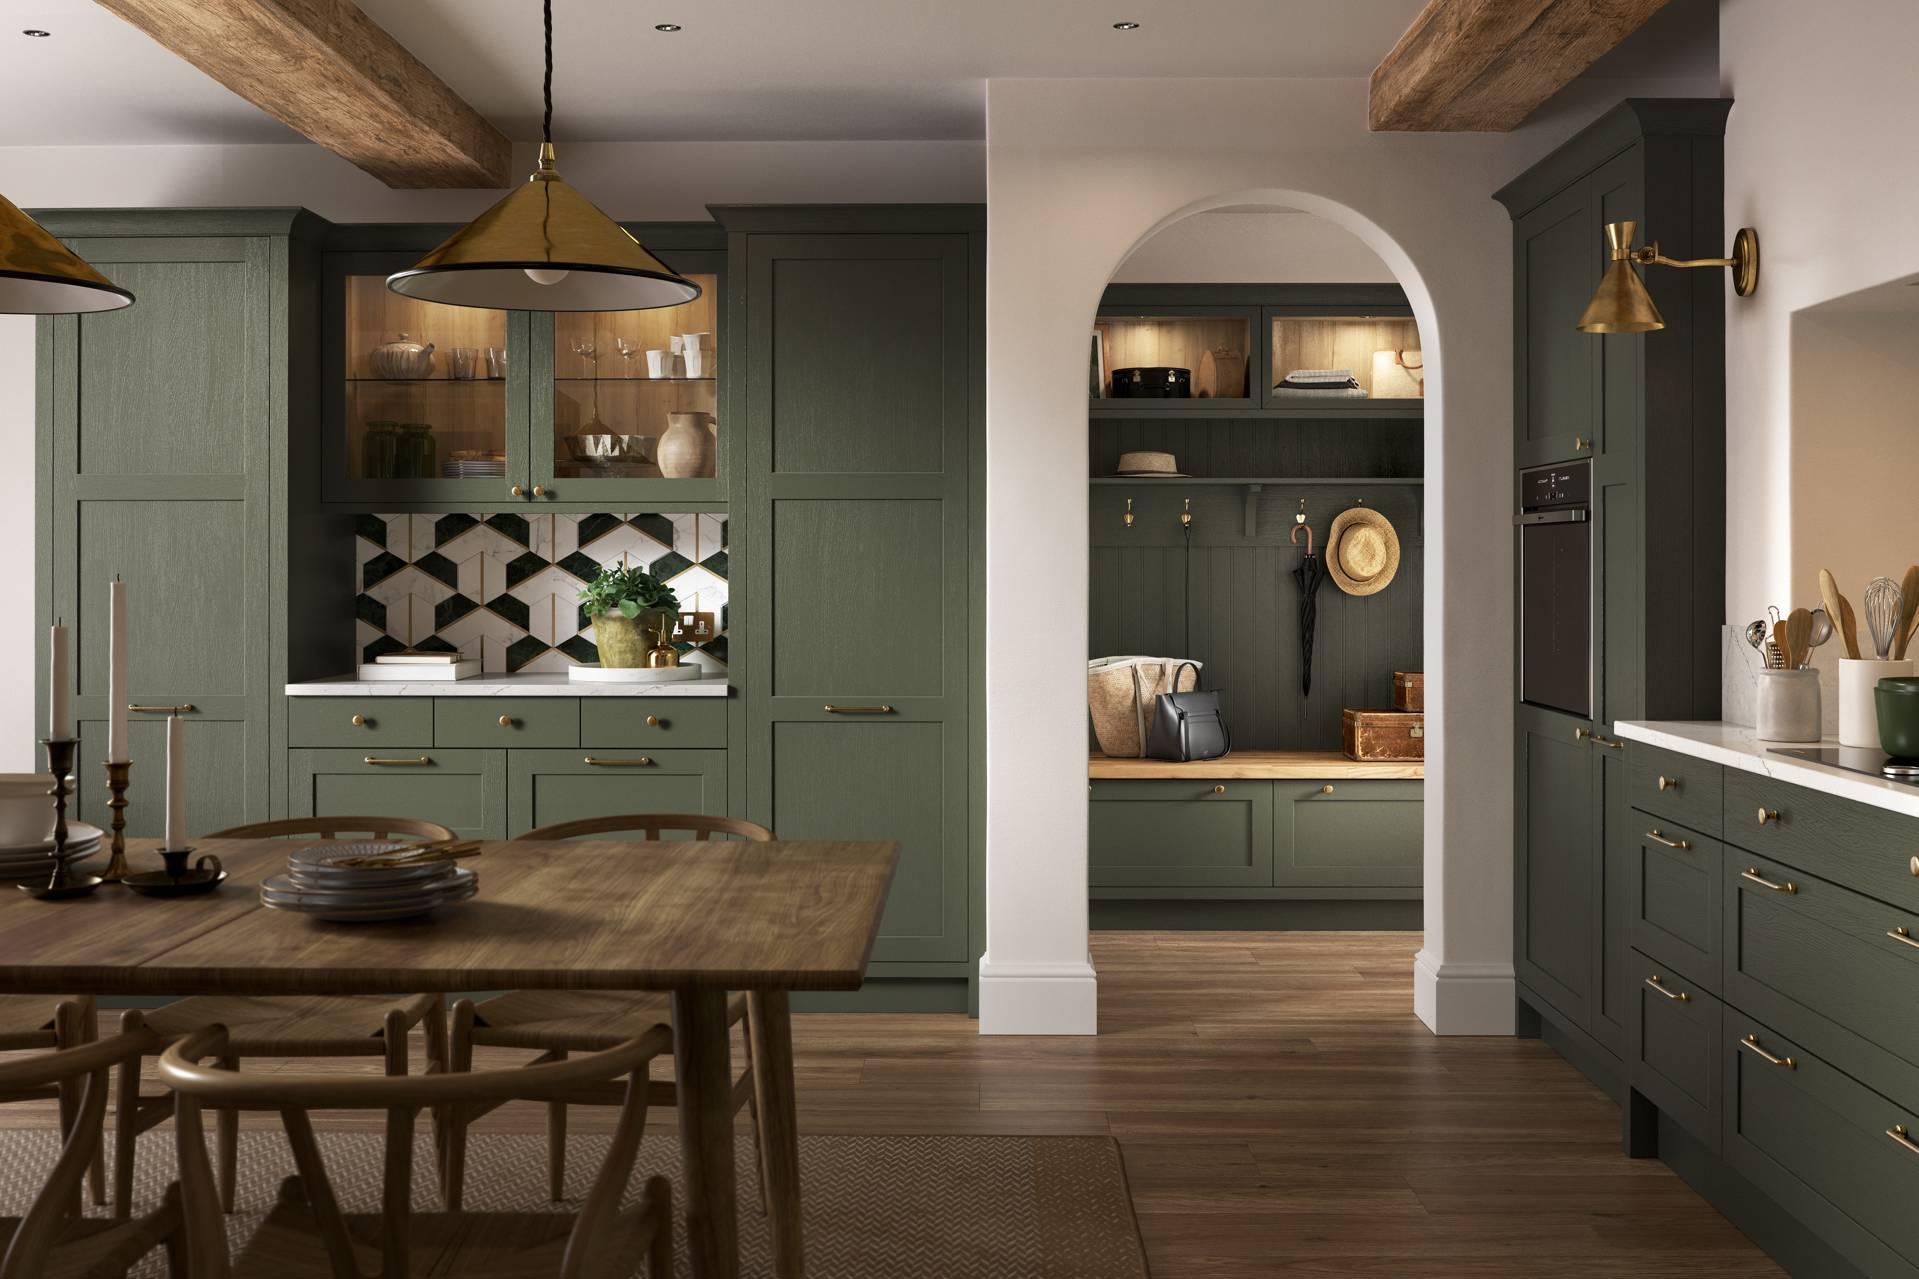 De-kalidad na Dark Green Lacquered Solid Wood Kitchen Cabinets na may Gold Pulls